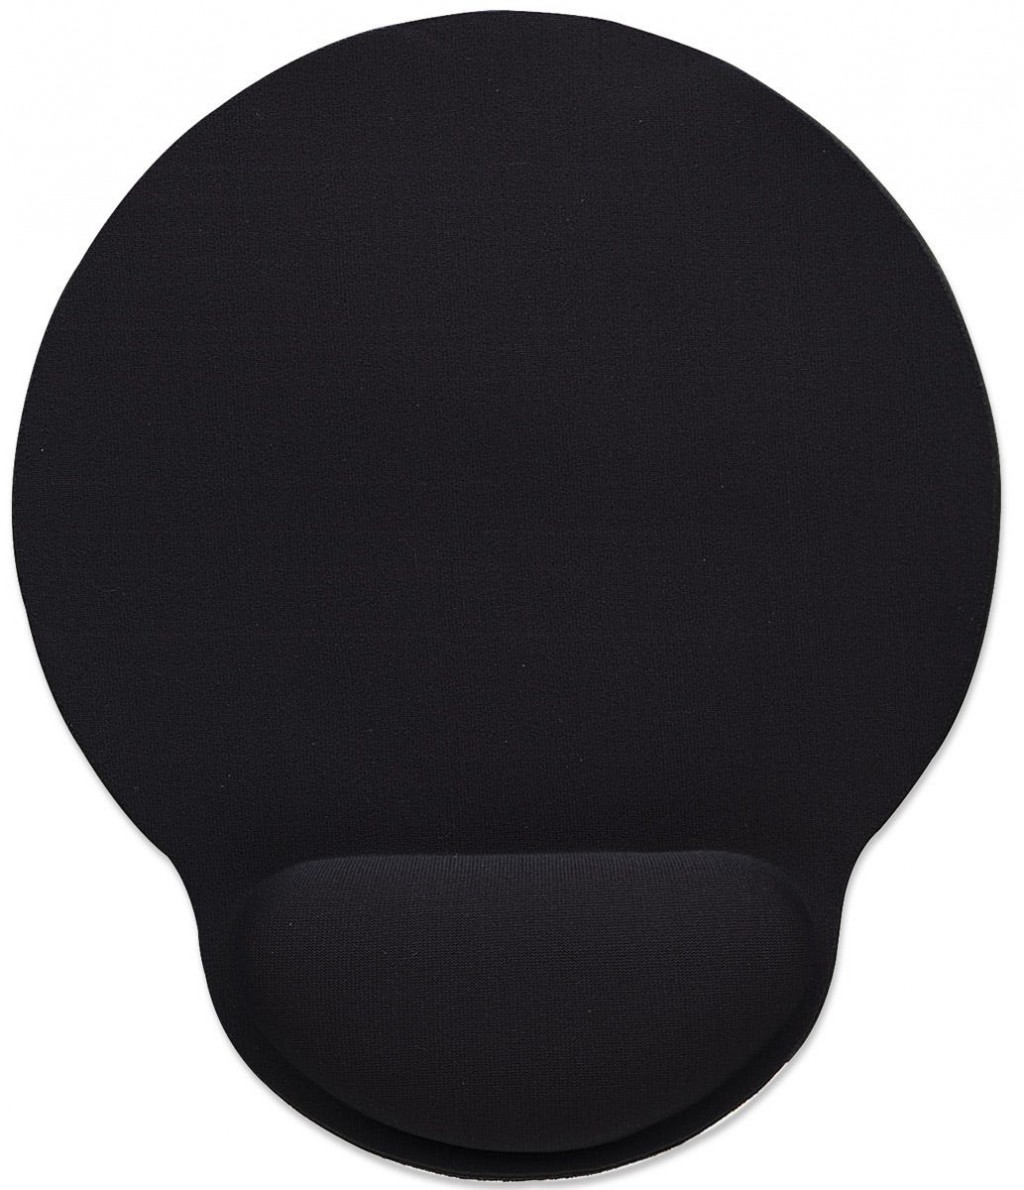 MANHATTAN Wrist-Rest Mouse Pad black